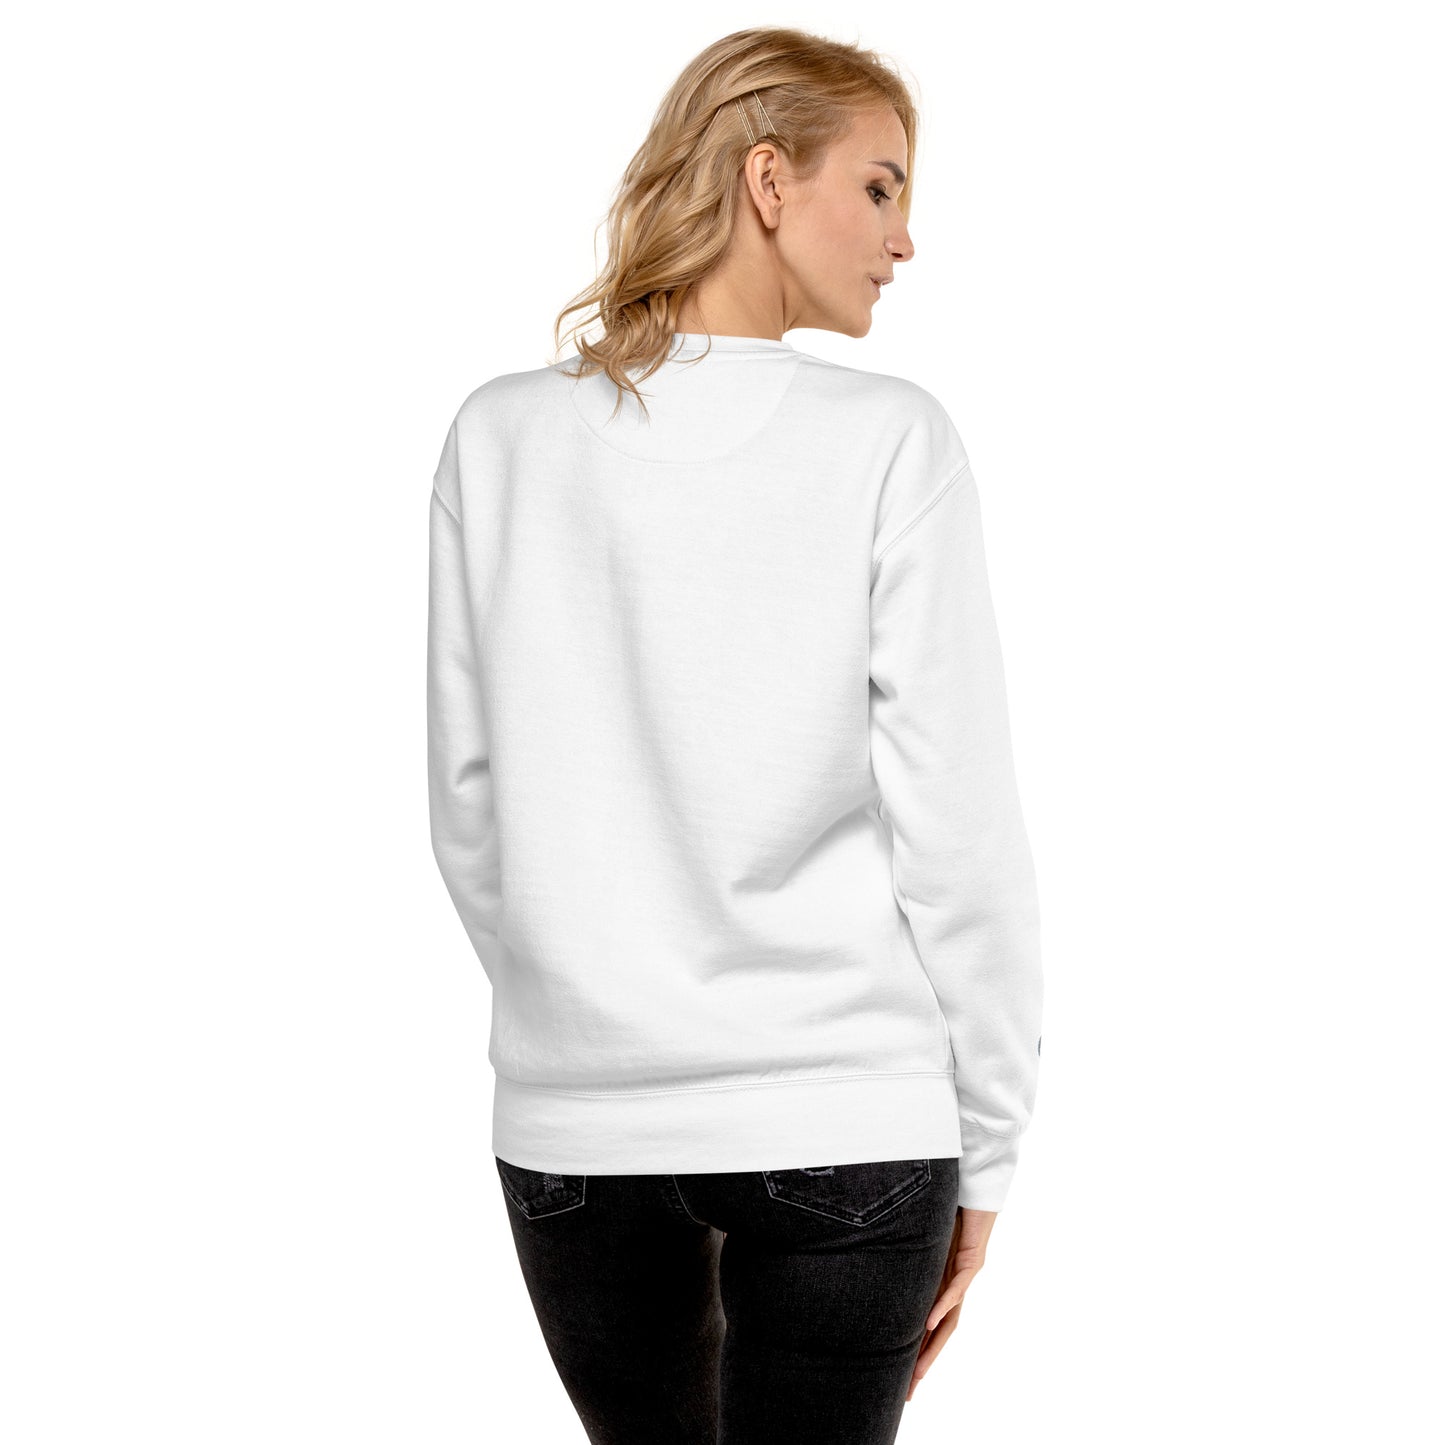 TIME OF VIBES - Unisex Premium Sweatshirt CORPORATE - €69.00